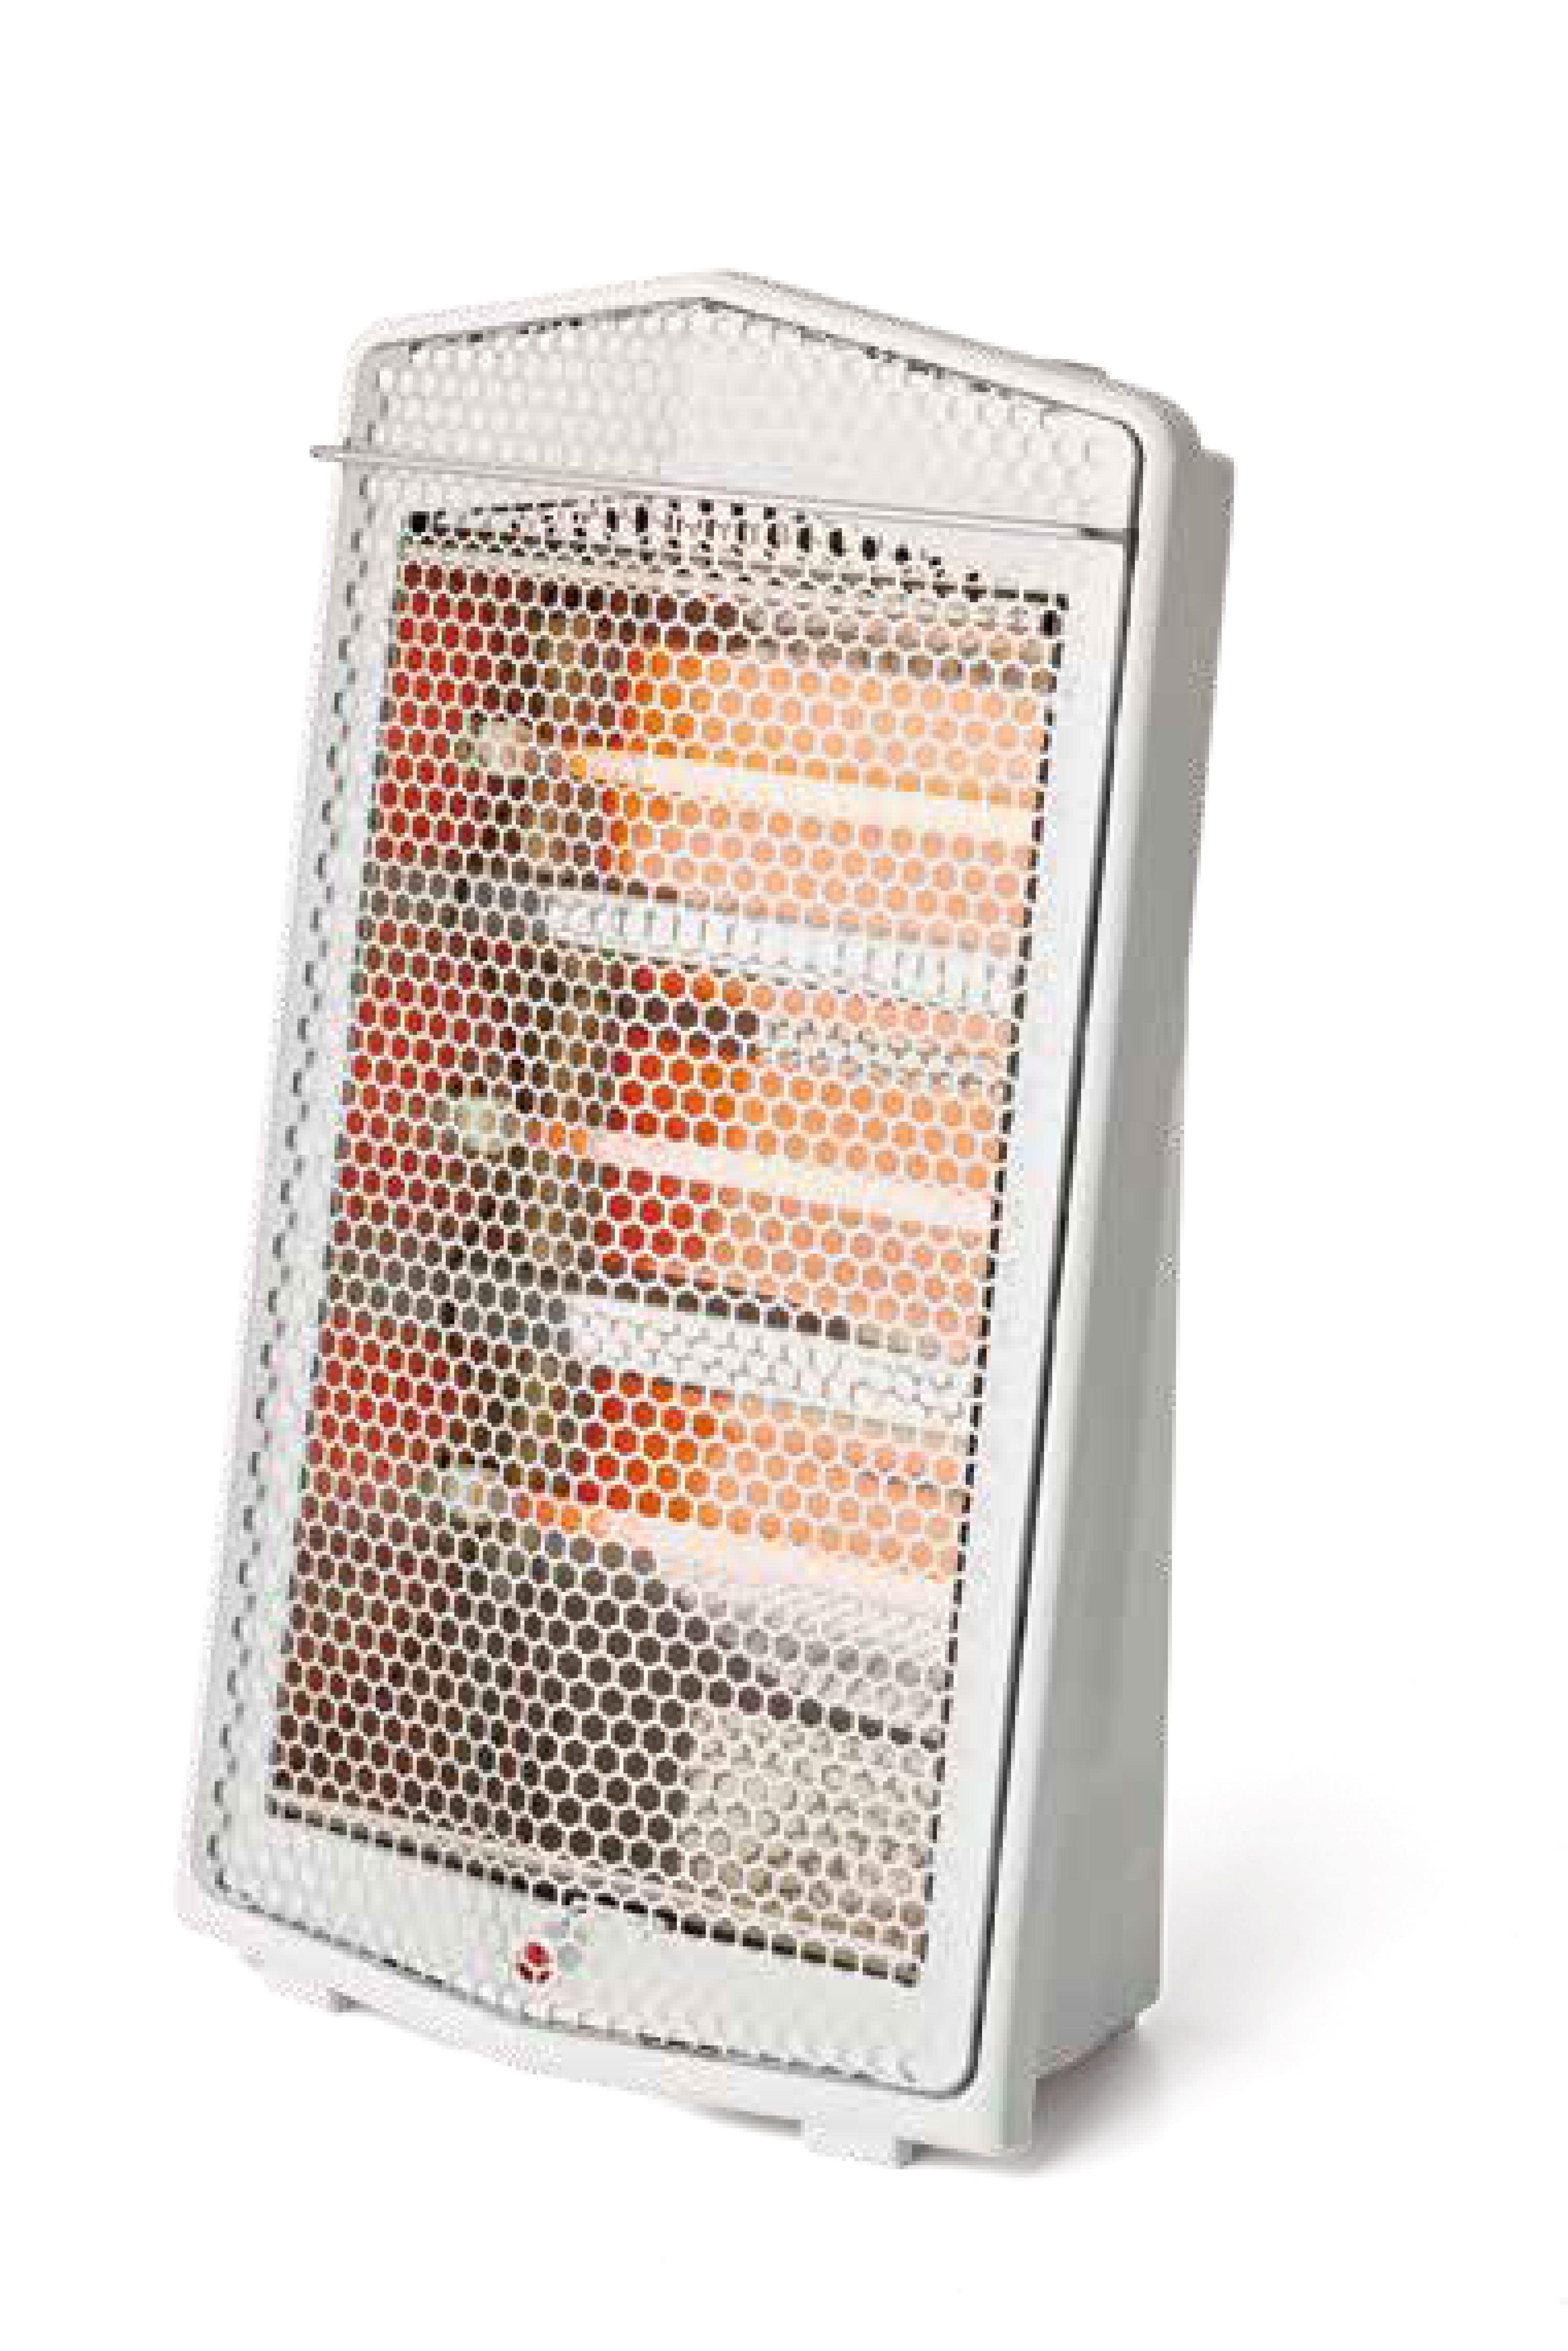 Pelonis 1500W Electric Quartz Radiant Heater with 3-Heat Settings, PSH20Q3AWW, White